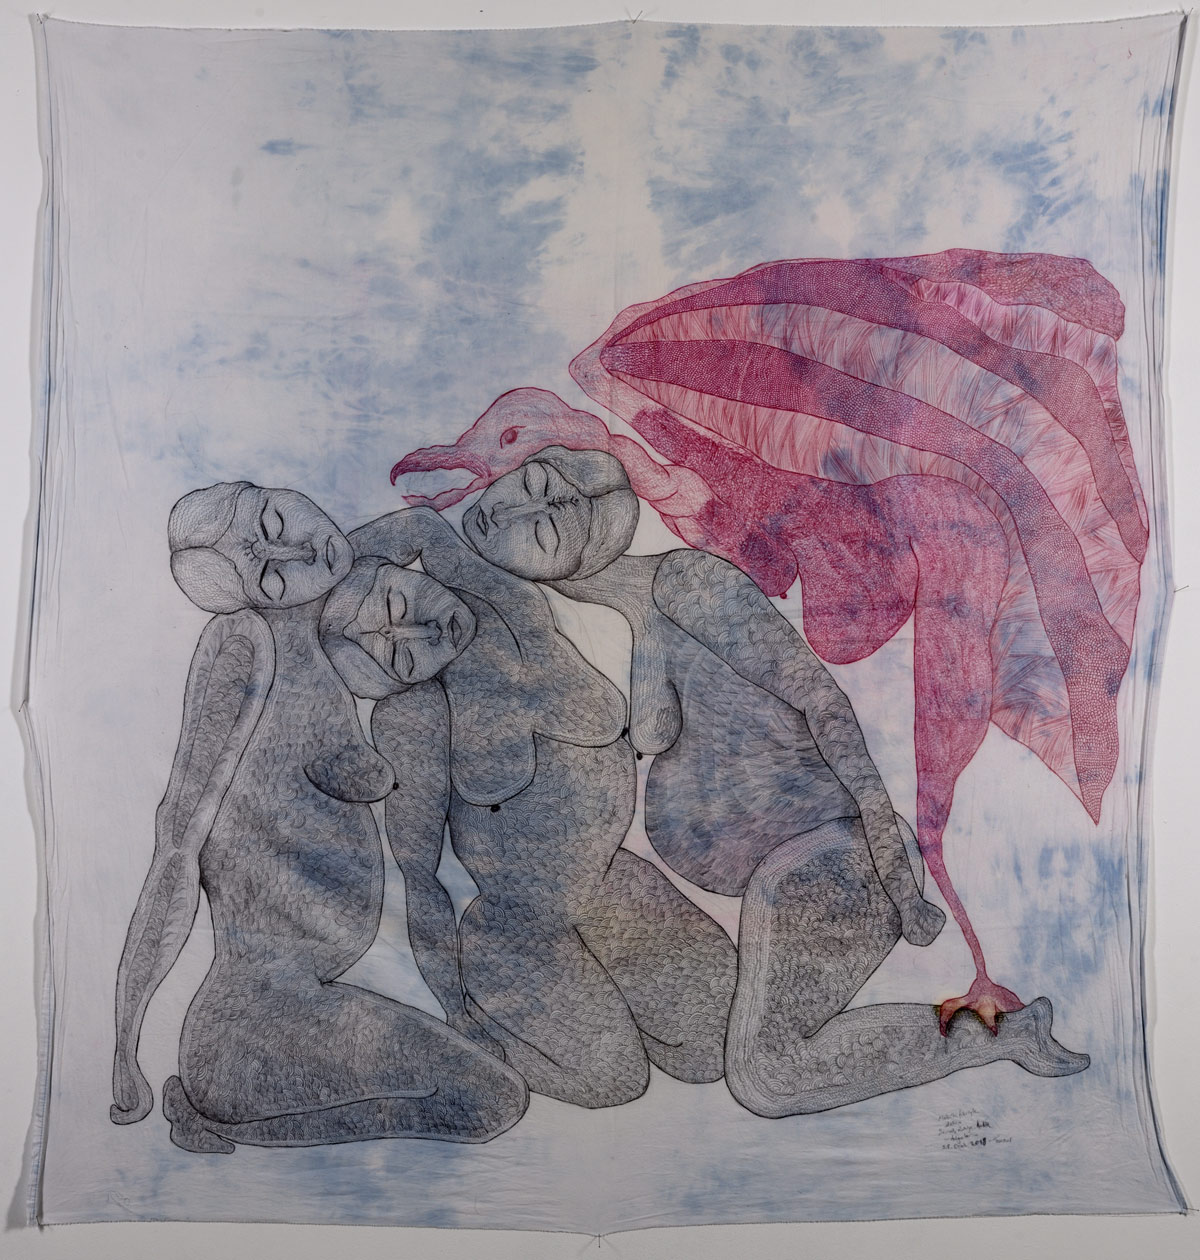 Zehra Doğan, Kuş kadinlar, Donne uccello (2019, carcere di Tarso; penna a sfera su tessuto, 150 x 142 cm). Photo credit: Jef Rabillon